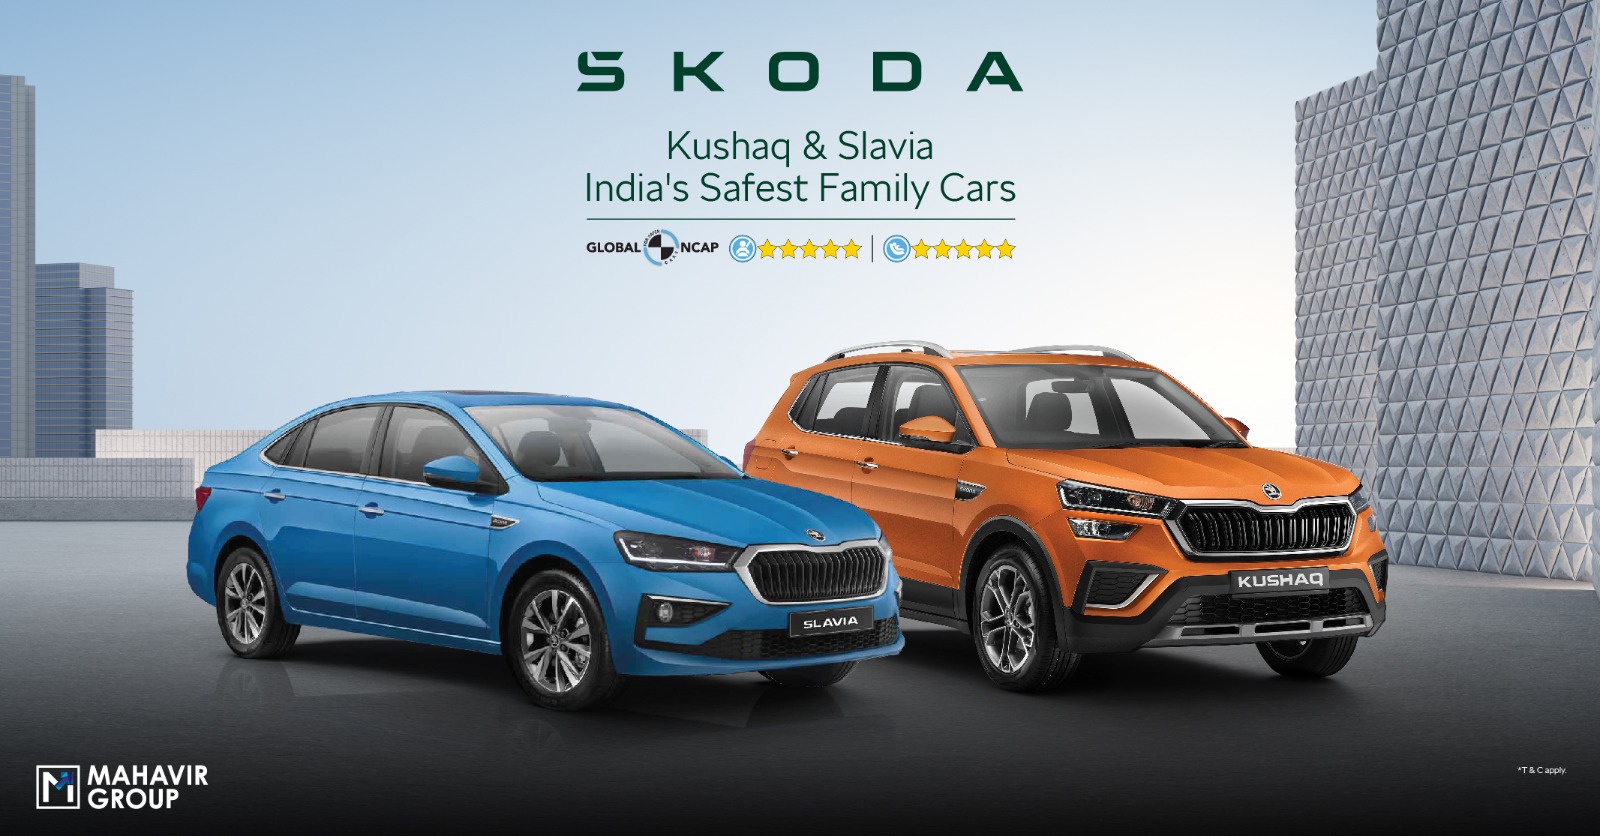 SKODA KUSHAQ AND SKODA SLAVIA- The Safest Family Cars with GNCAP Rating.